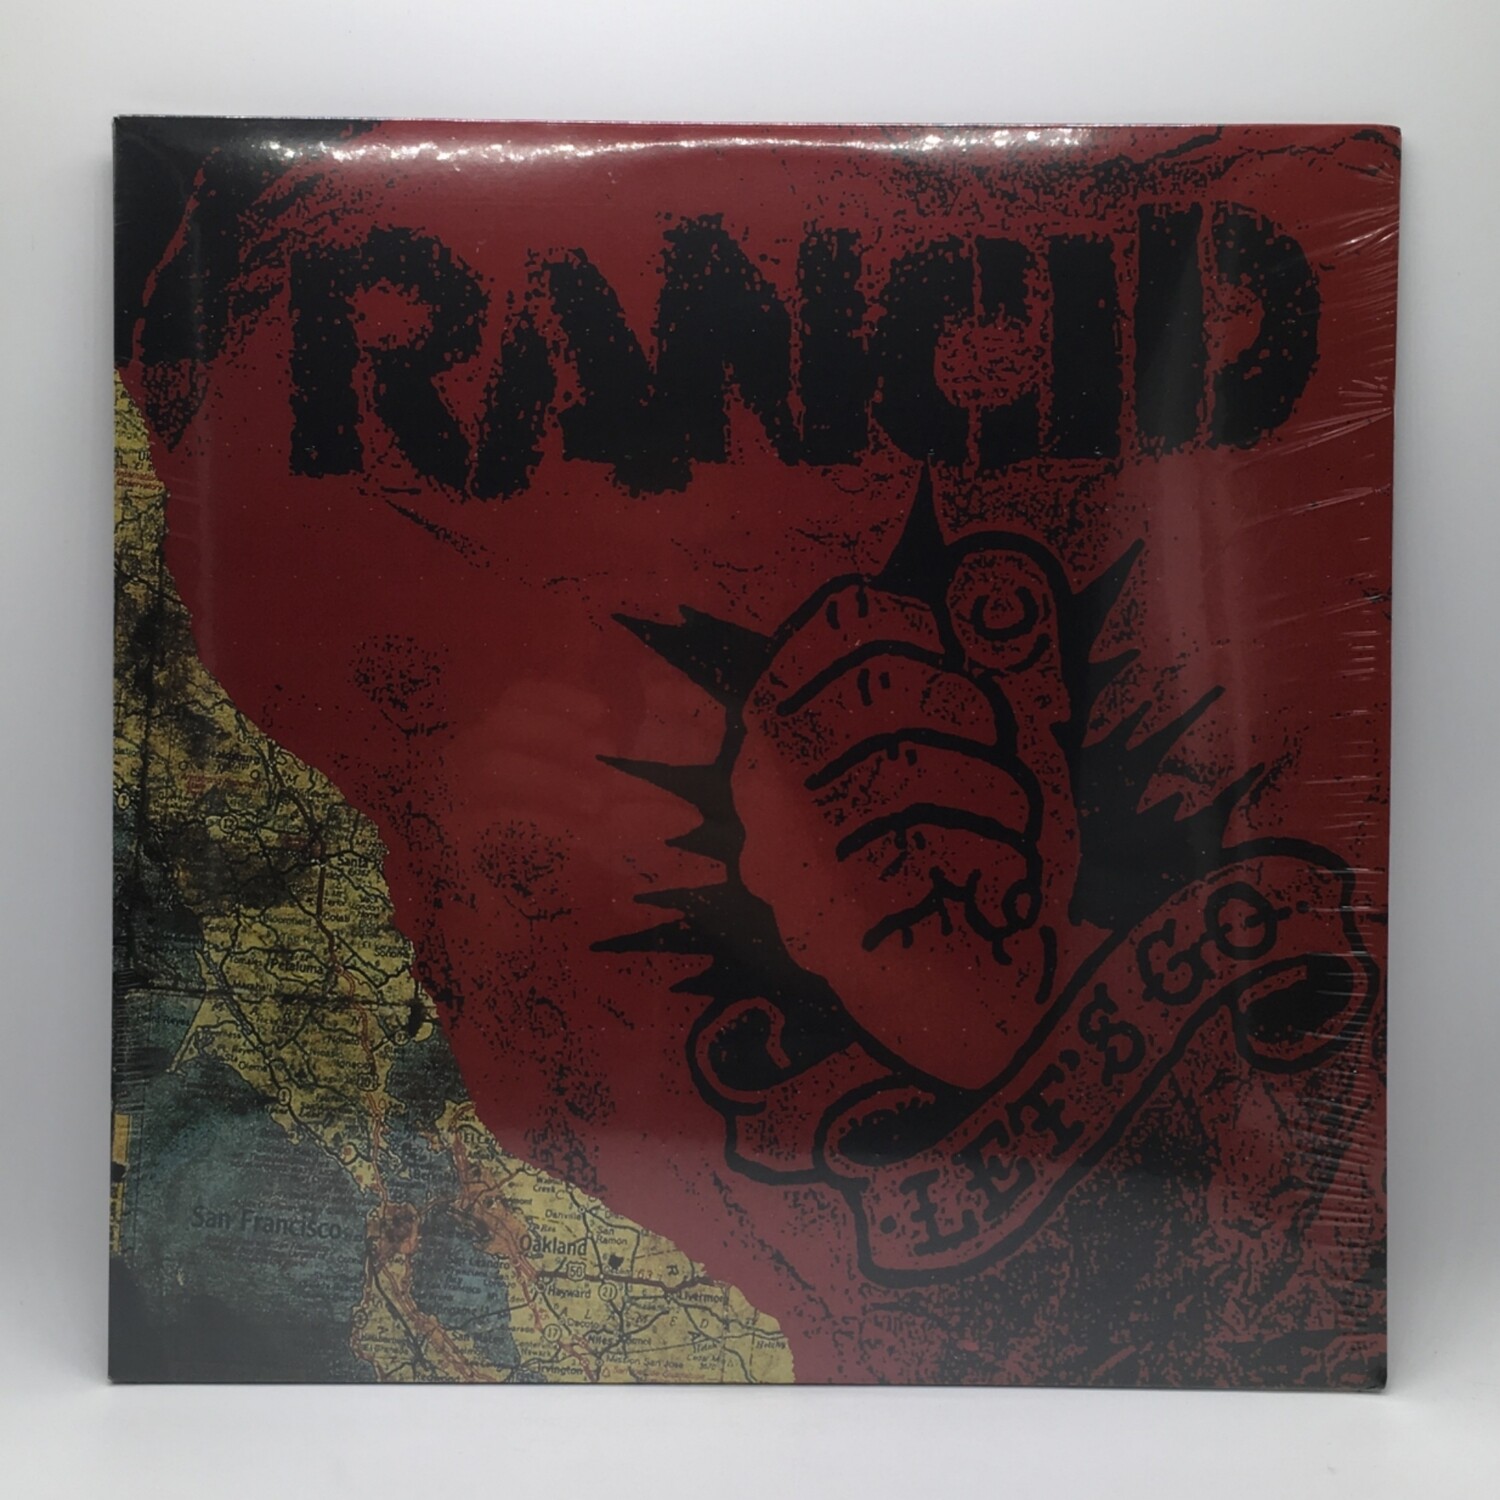 RANCID -LETS GO- LP